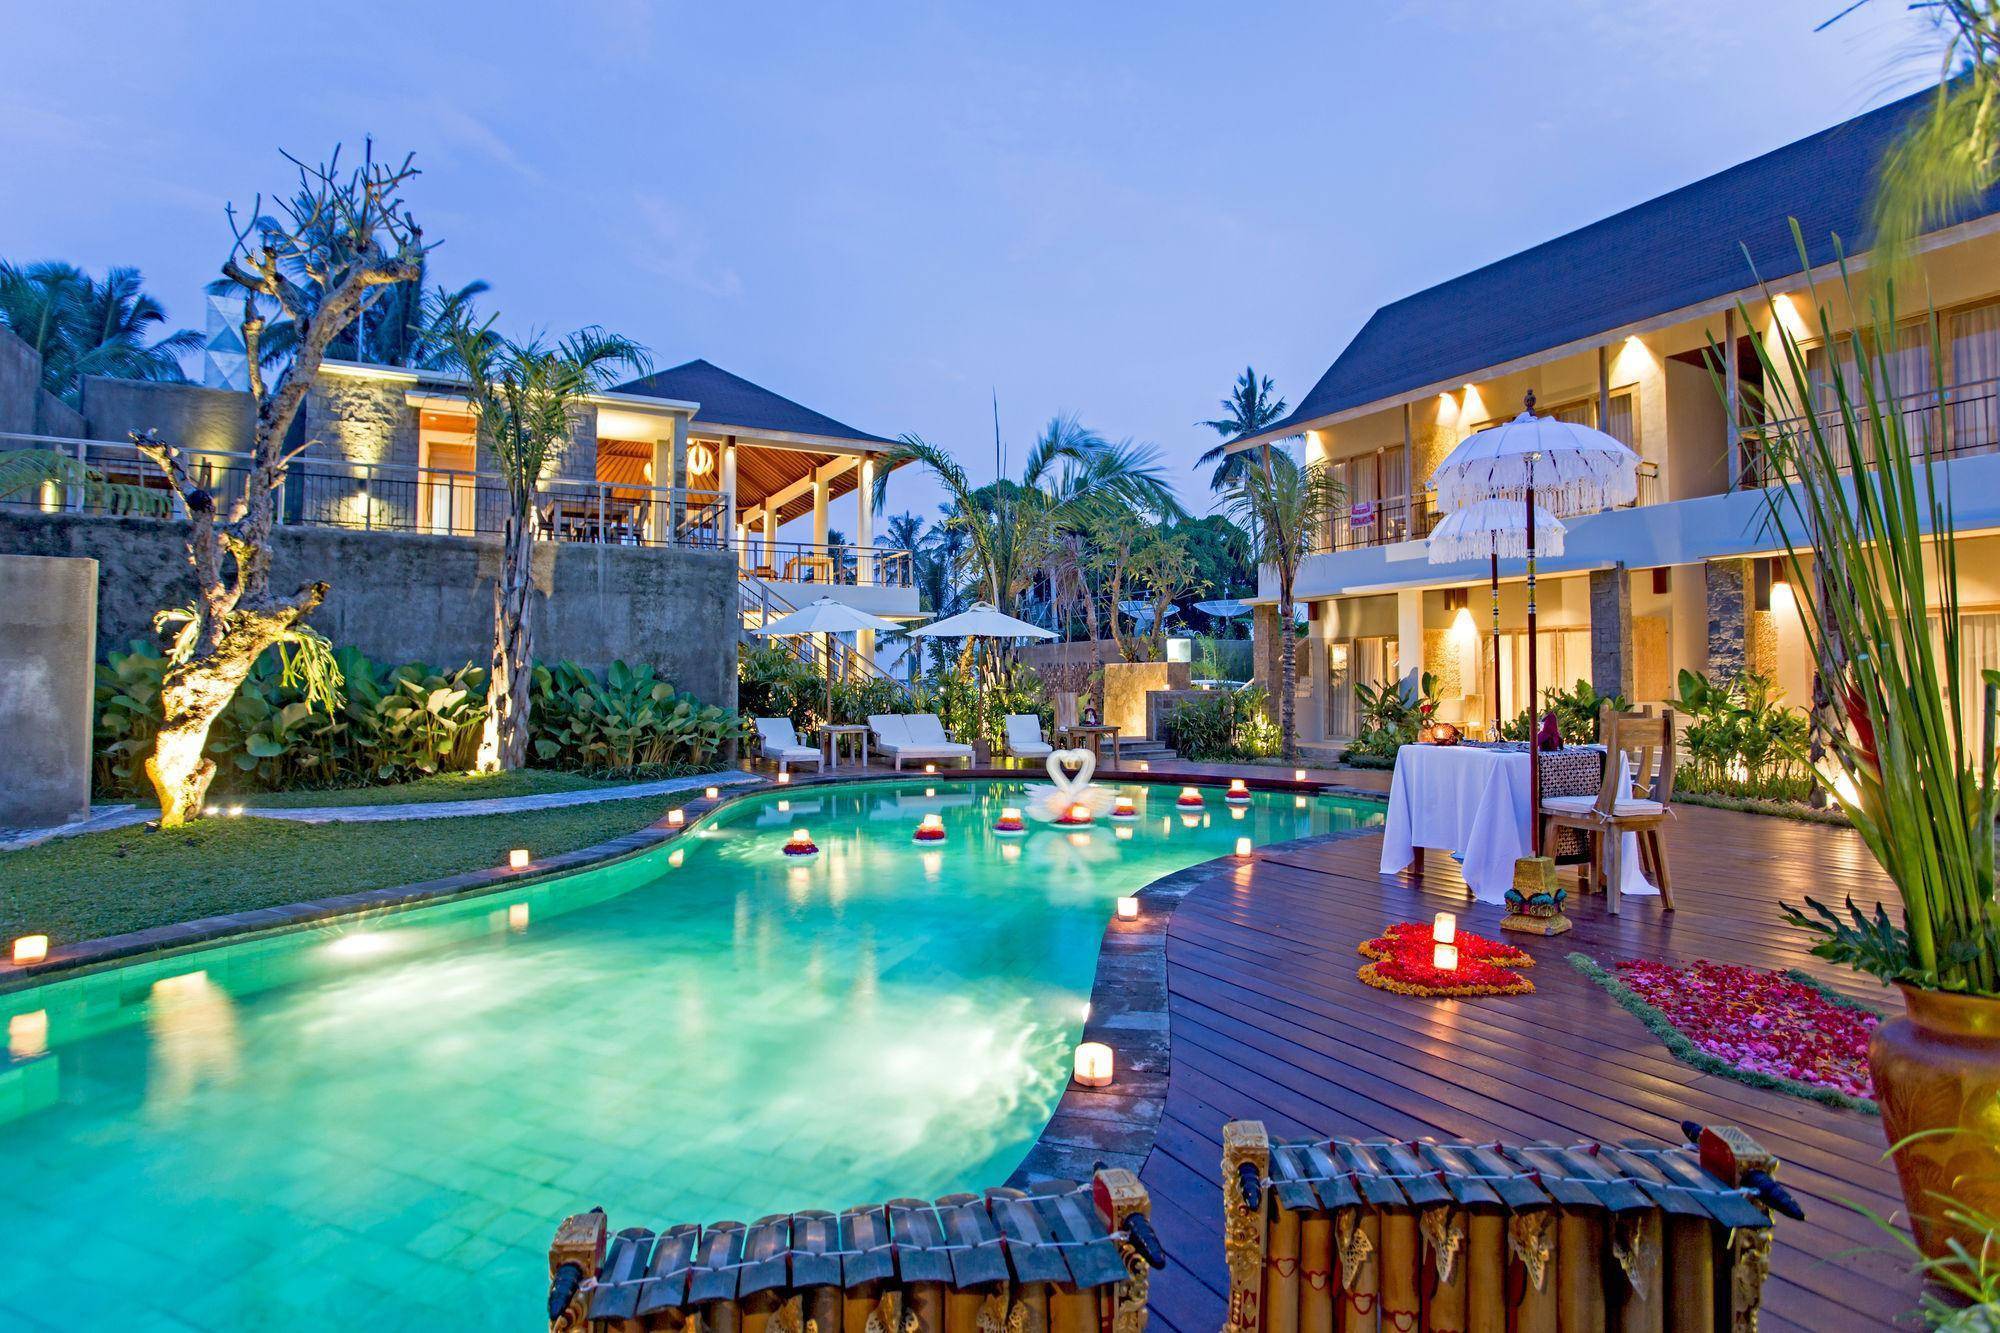 Melia bali villas & spa resort 5* - индонезия, бали - отели | пегас туристик